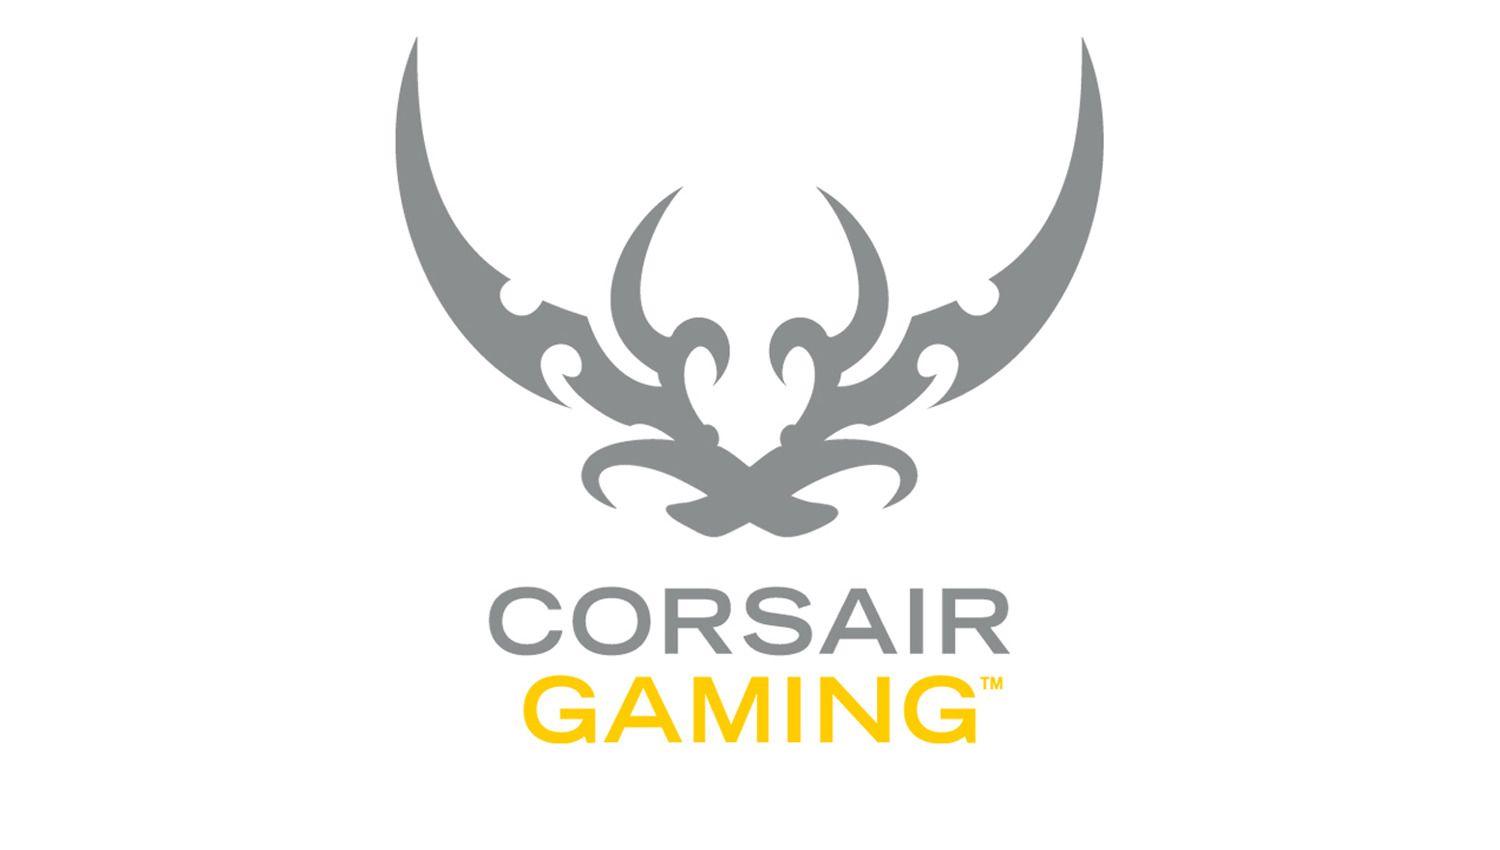 Corsair Logo - Corsair returns to 'Sails' logo, scuttles the hated swords | PCWorld